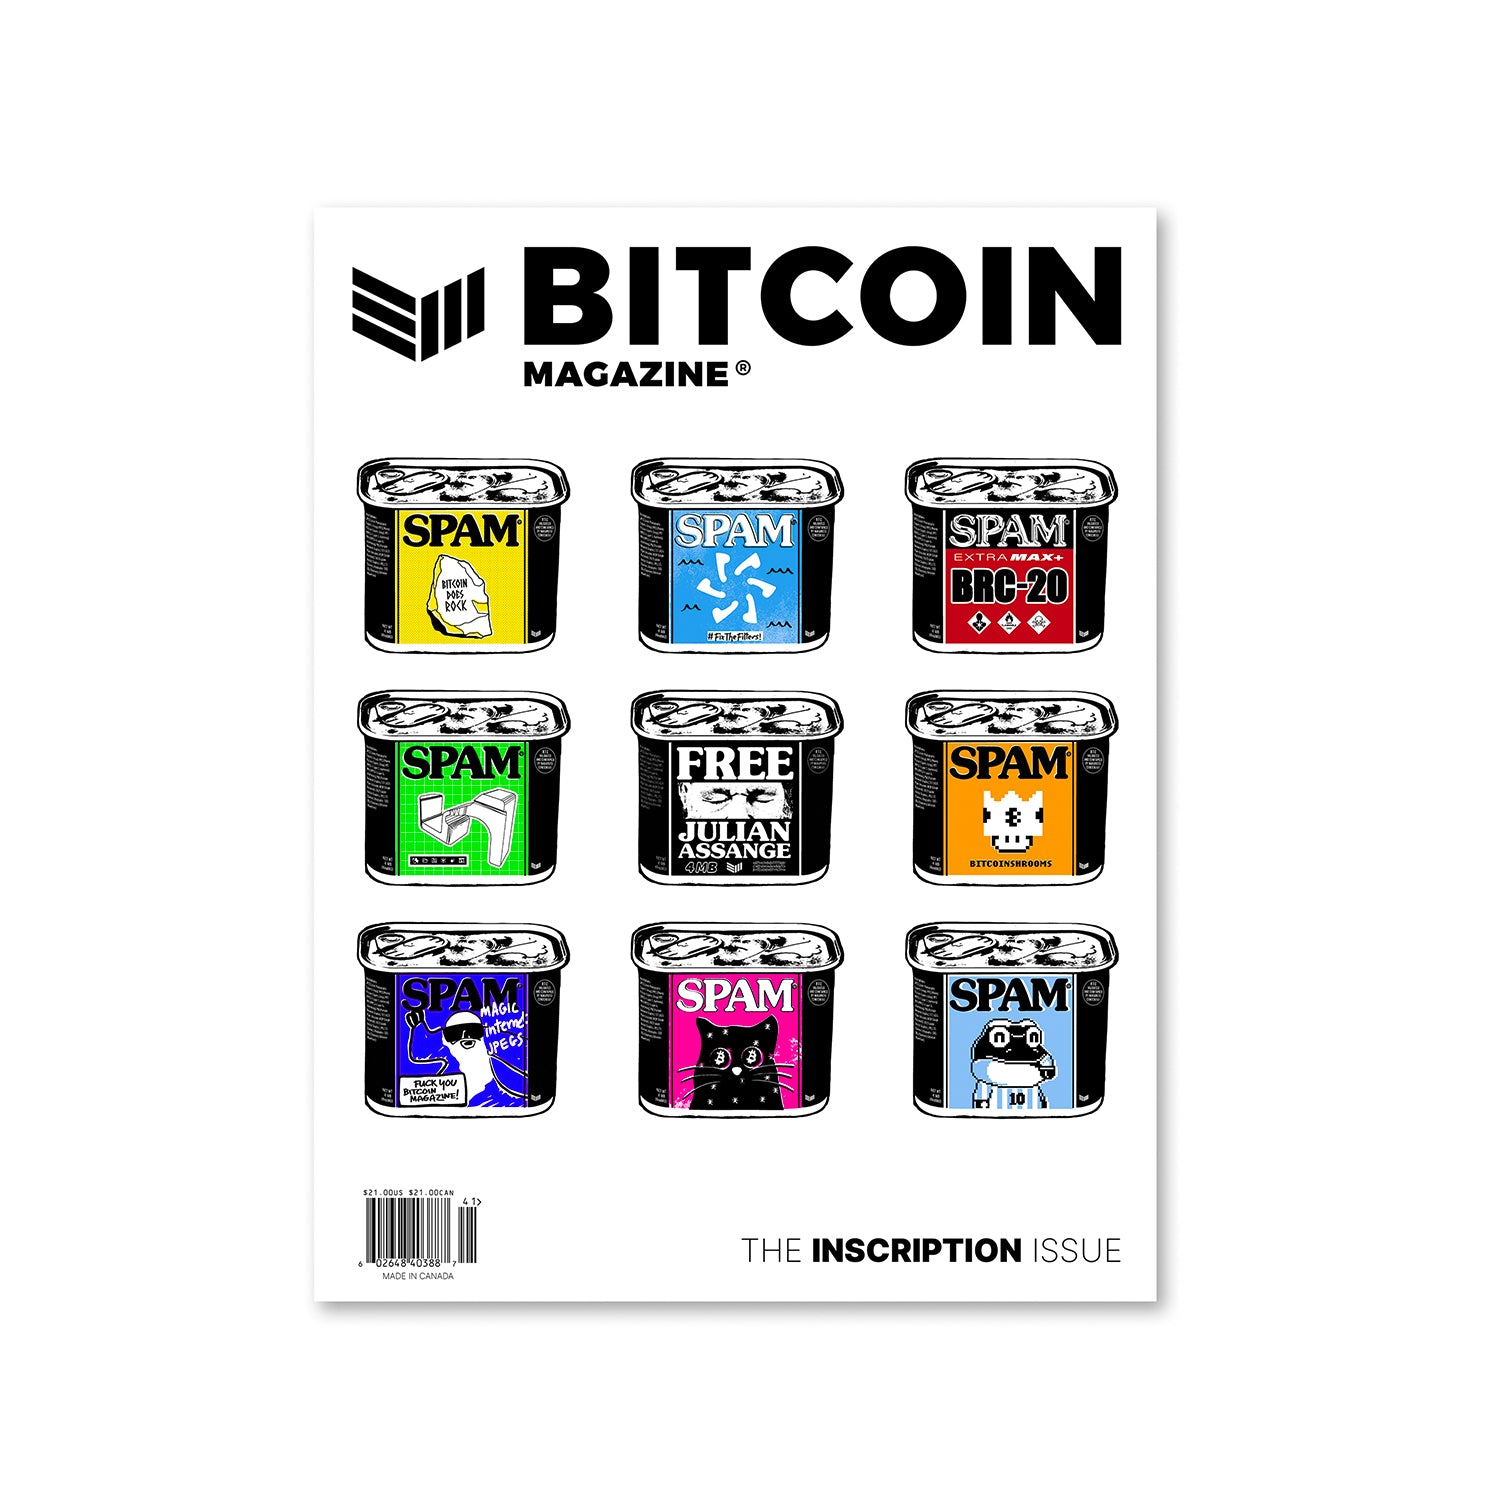 Bitcoin Magazine Annual Subscription Gift - Bitcoin Magazine